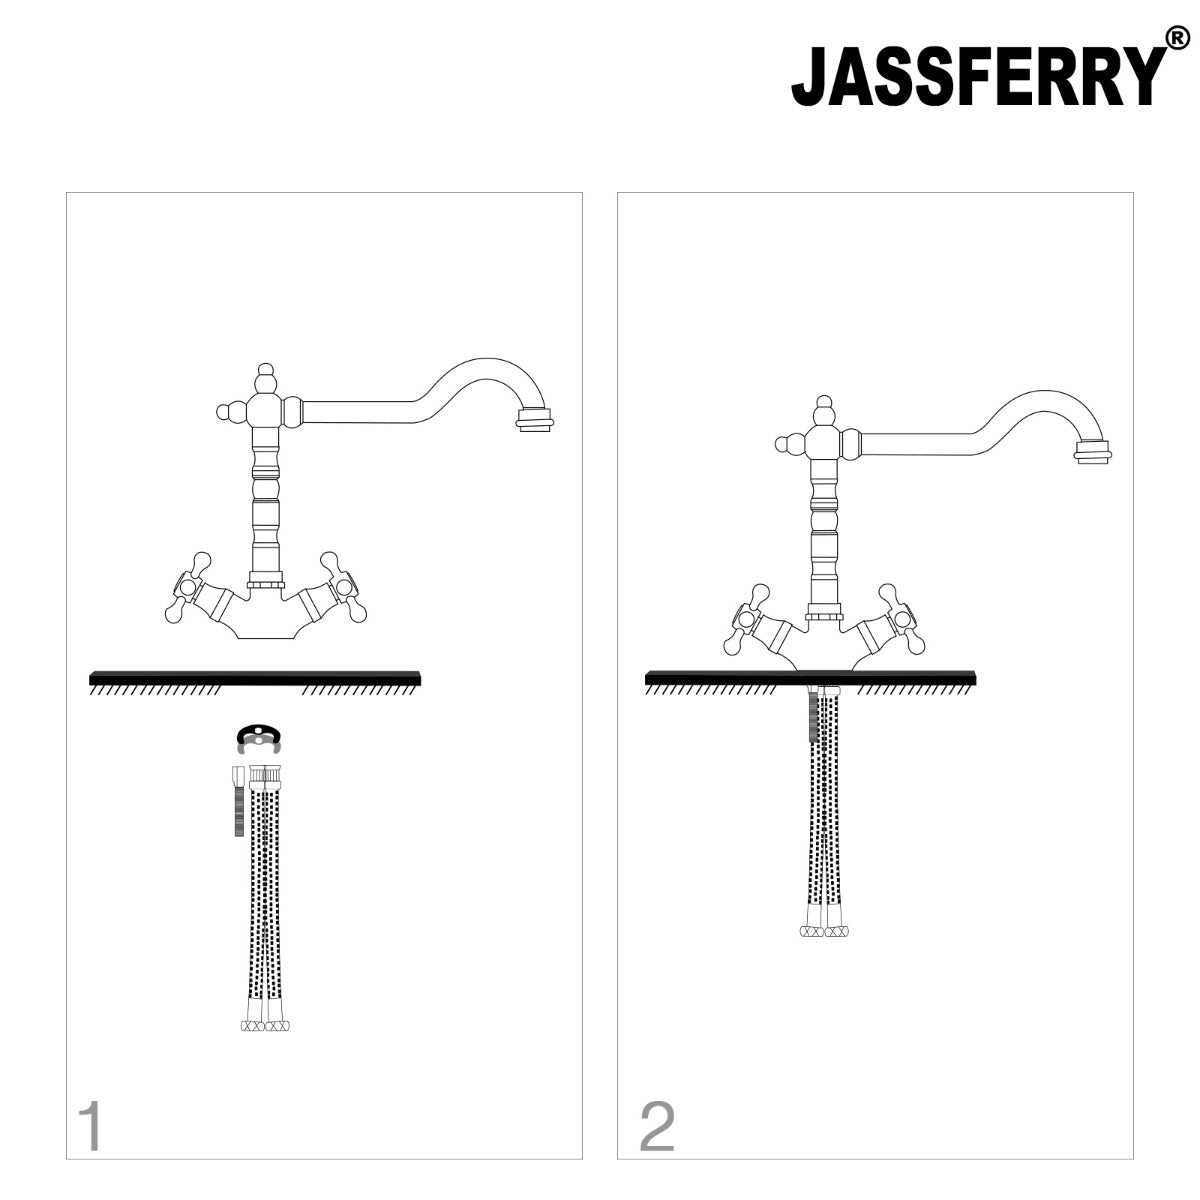 JassferryJASSFERRY New Vintage Monobloc Kitchen Sink Mixer Tap Swivel Spout French CrossKitchen taps